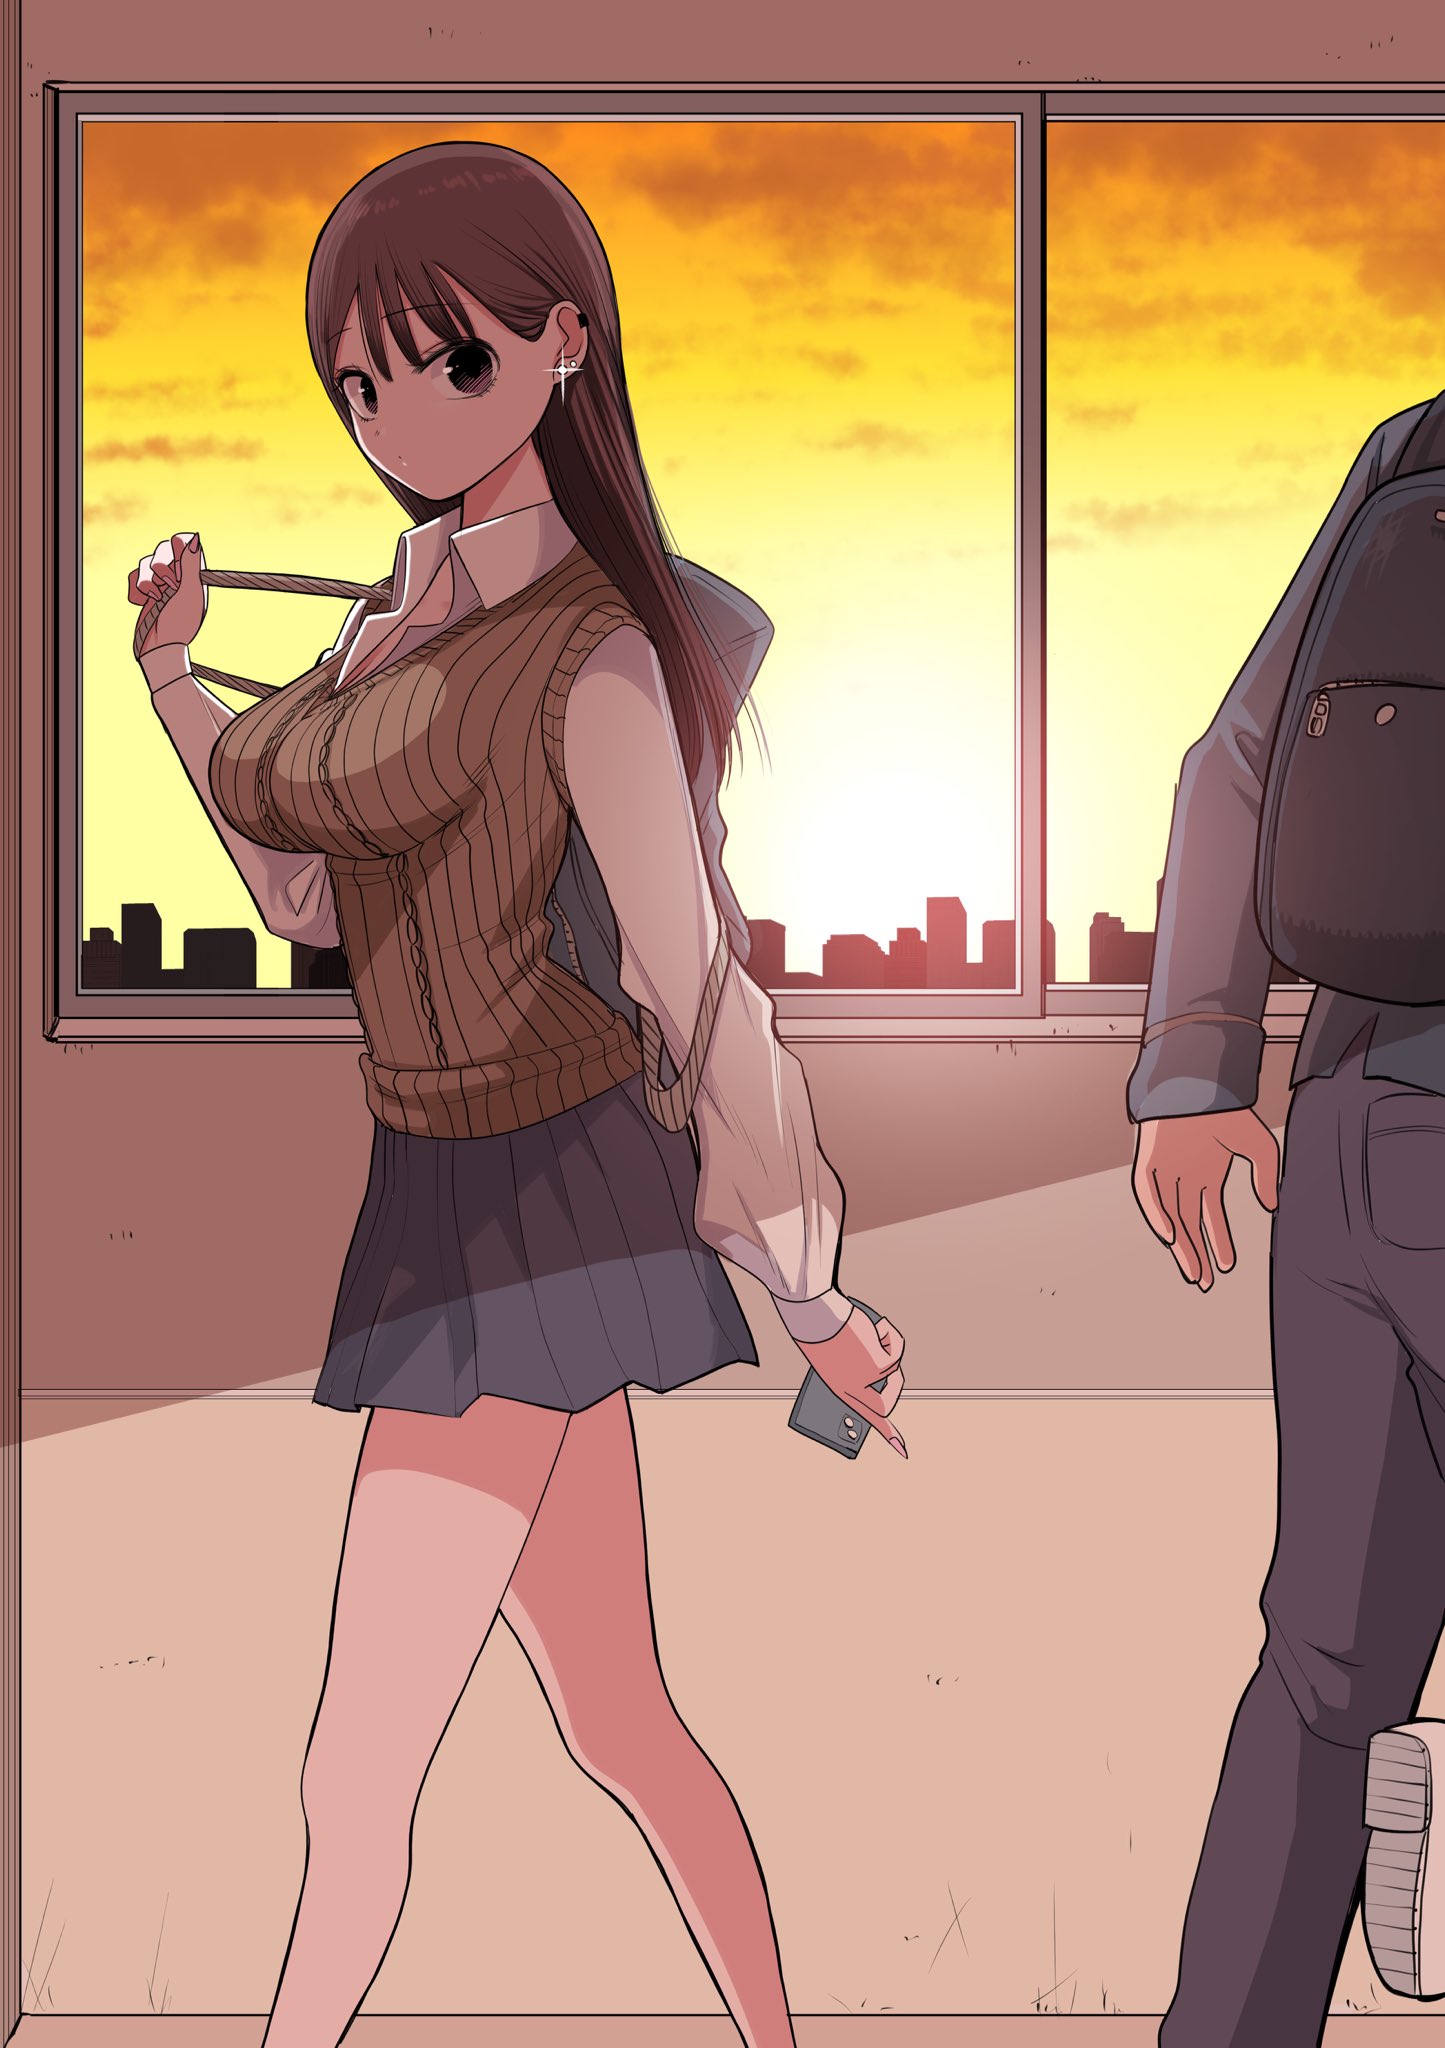 Menhera chan cap 19 (manga) - Mismangas y anime